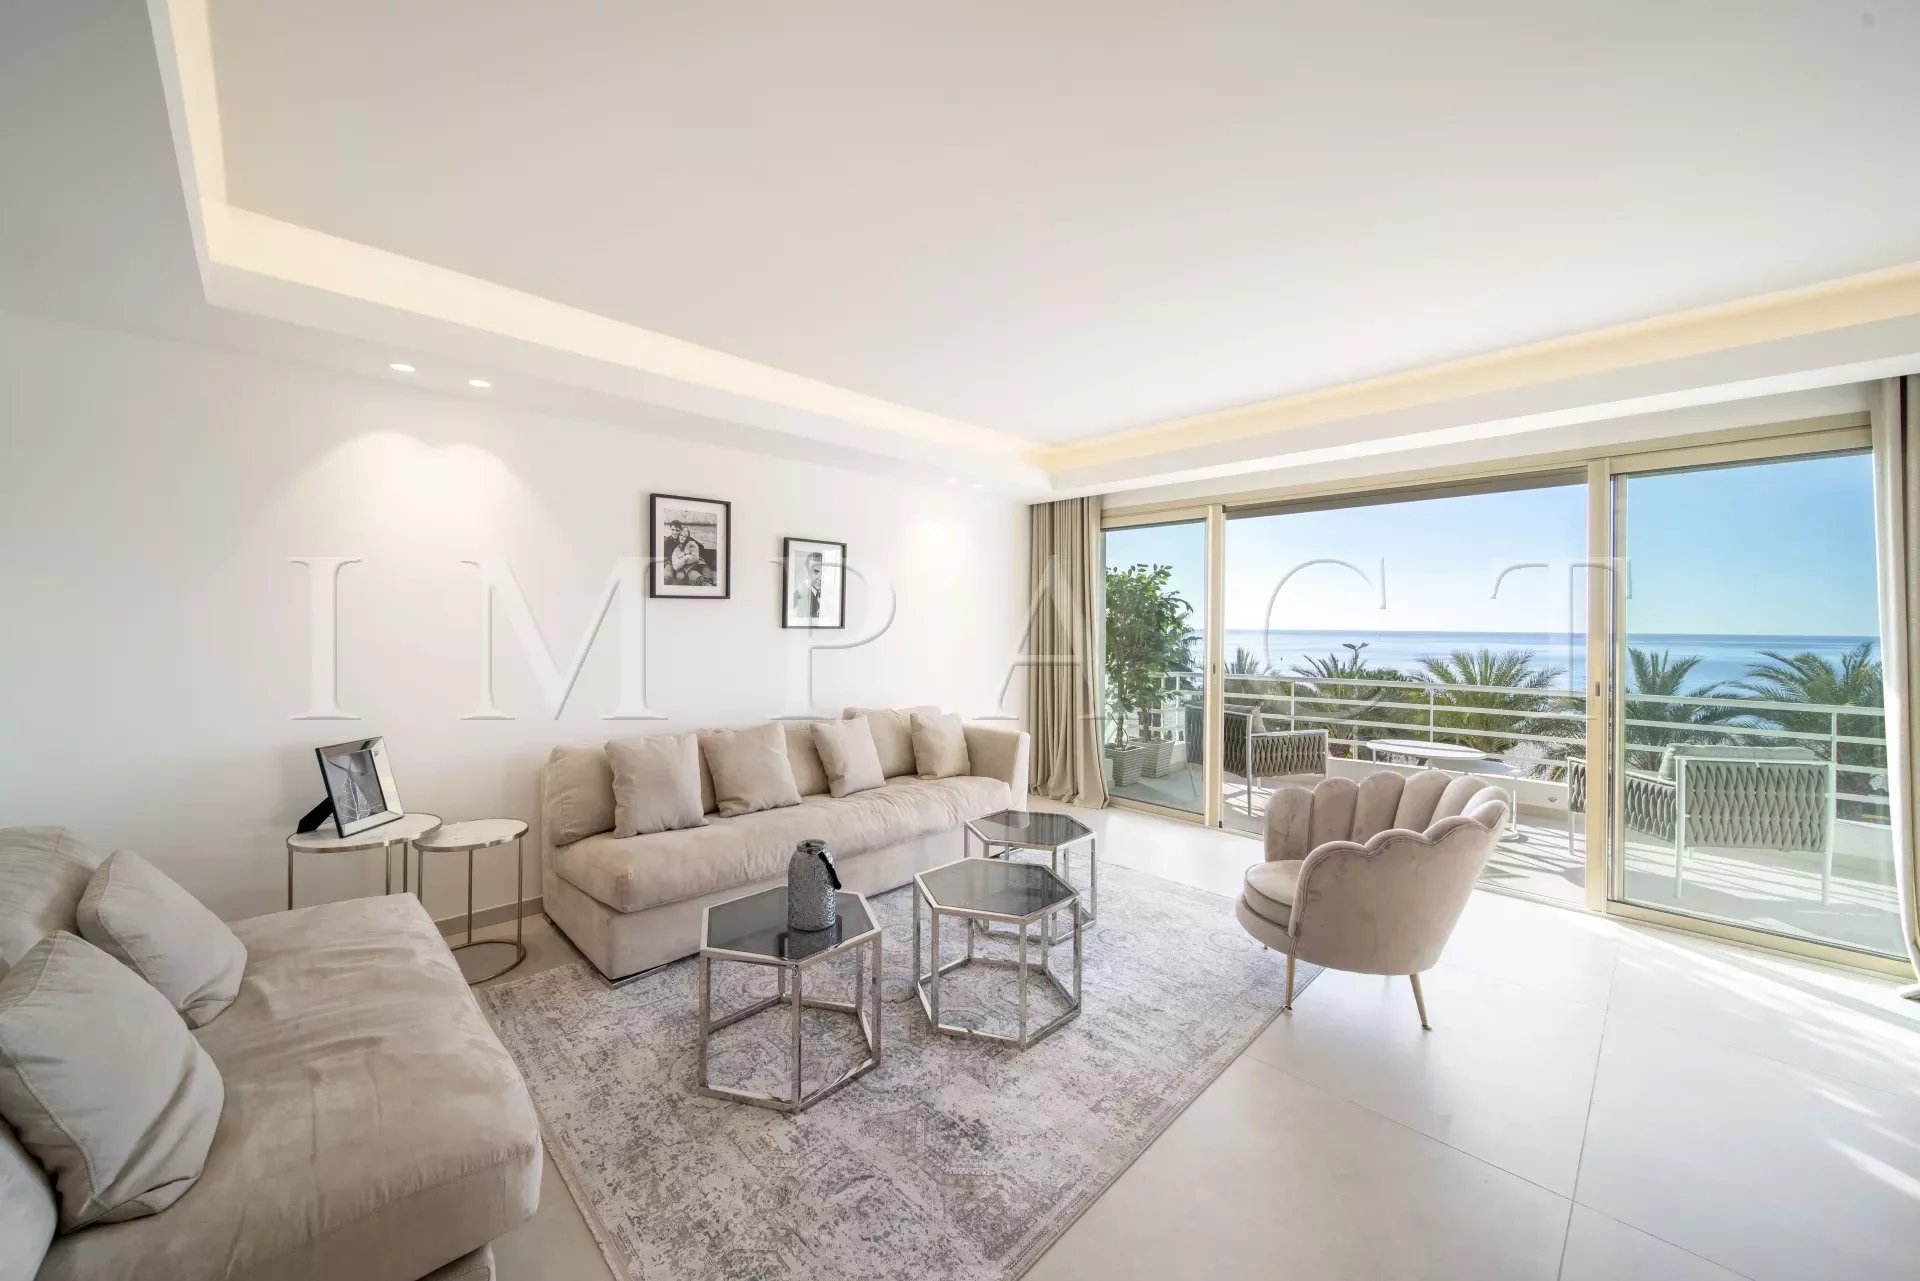 Cannes Croisette - Sea view apartment for rent